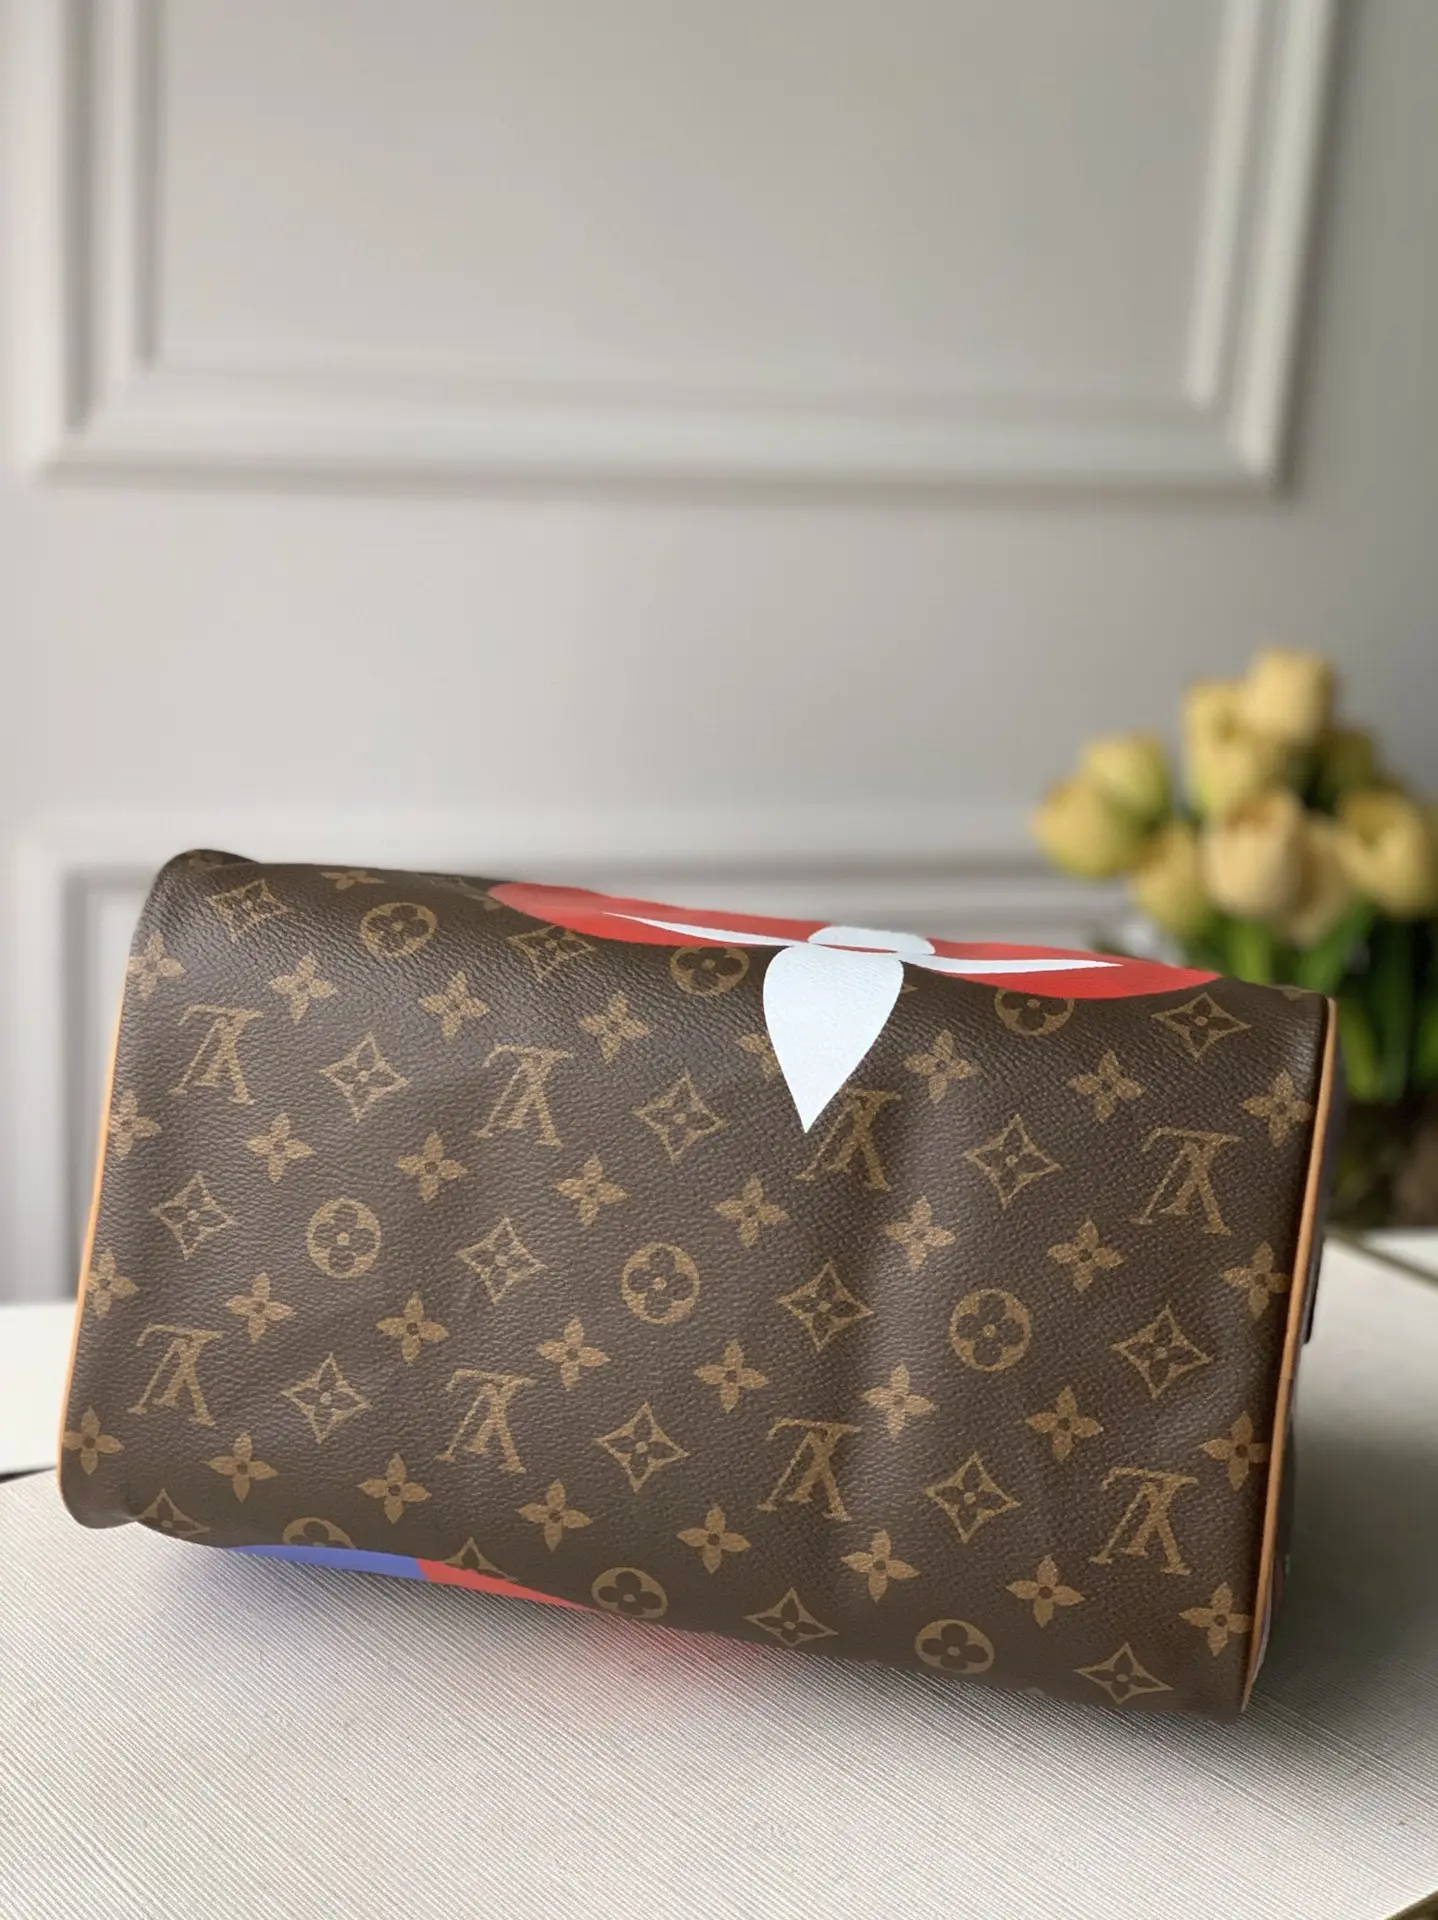 Louis Vuitton Speedy Bandouliere 30 Handbags 